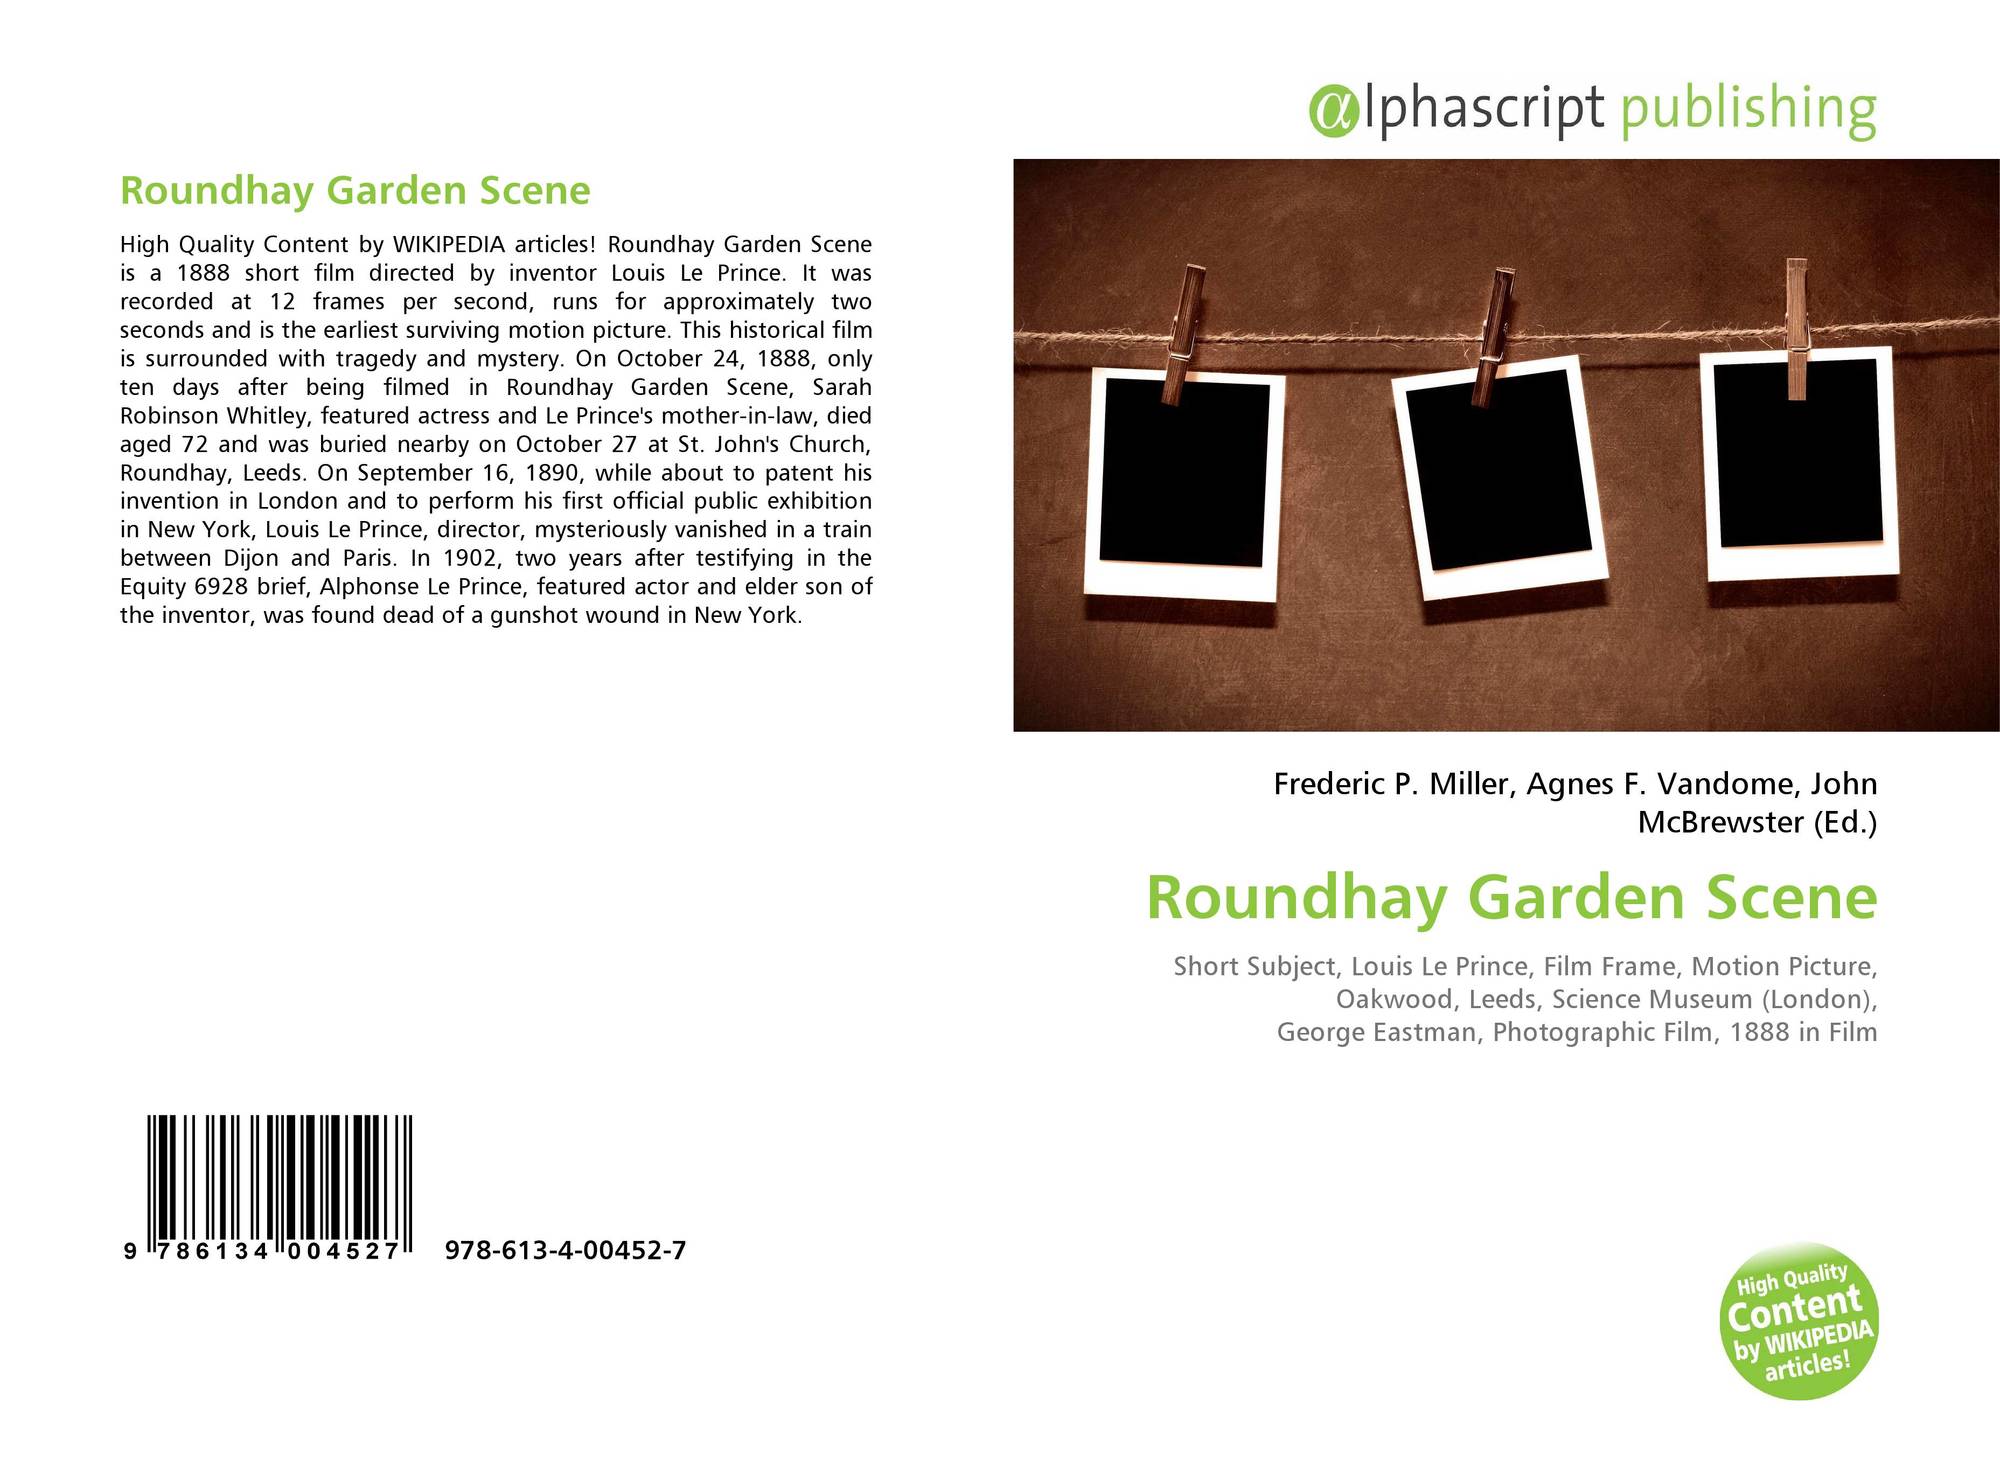 Roundhay Garden Scene 978 613 4 00452 7 6134004529 9786134004527